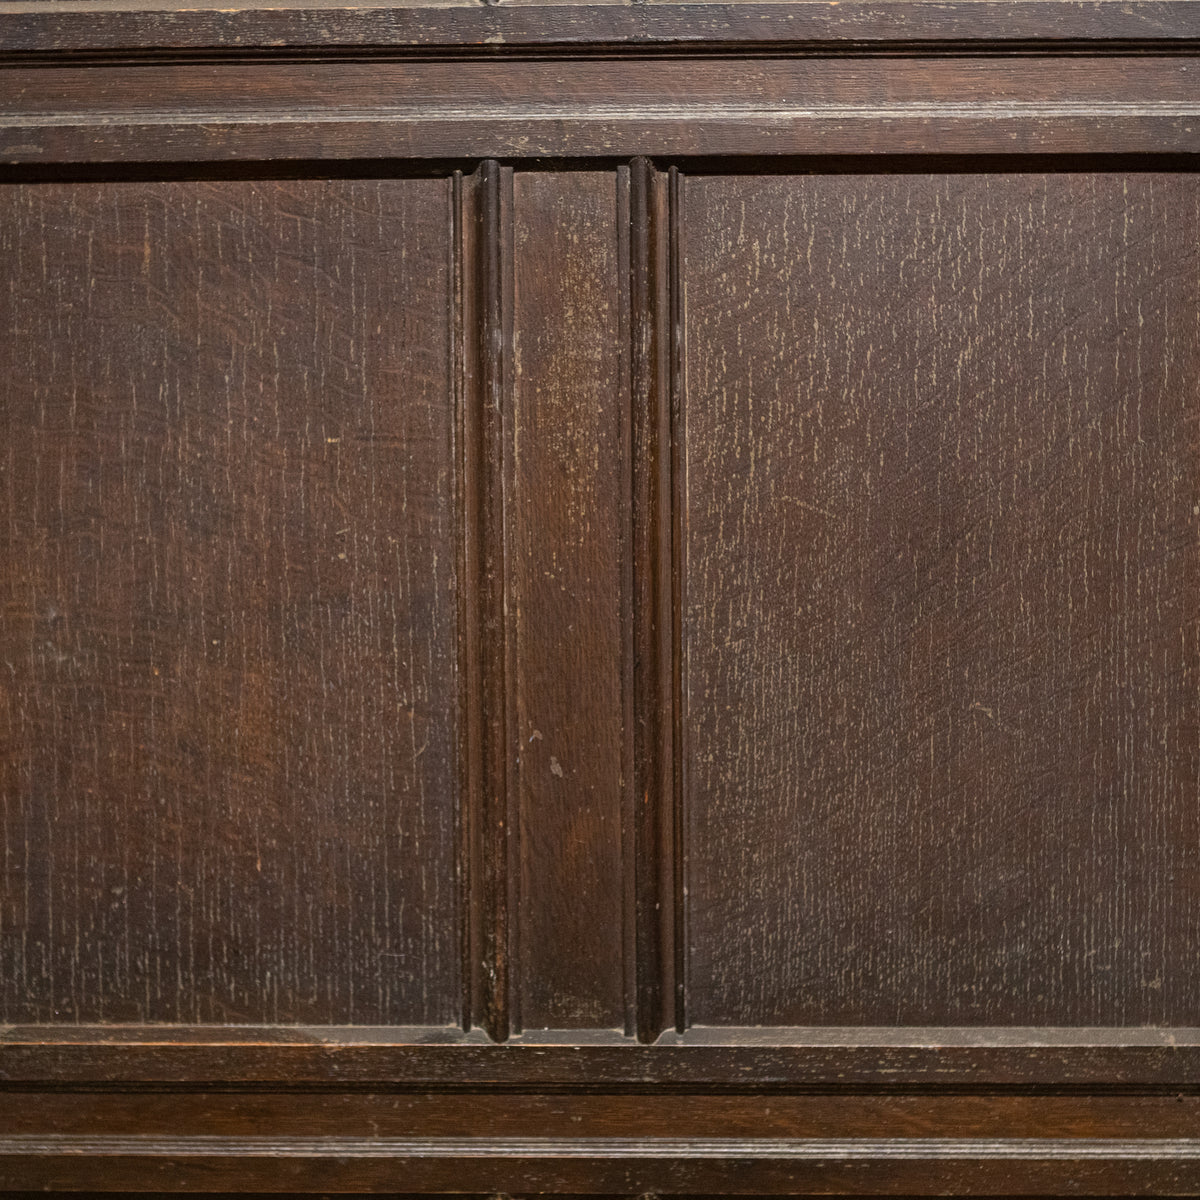 Antique Victorian 4 Panel Door with Ornate Detailing - 209cm x 91.5cm | The Architectural Forum